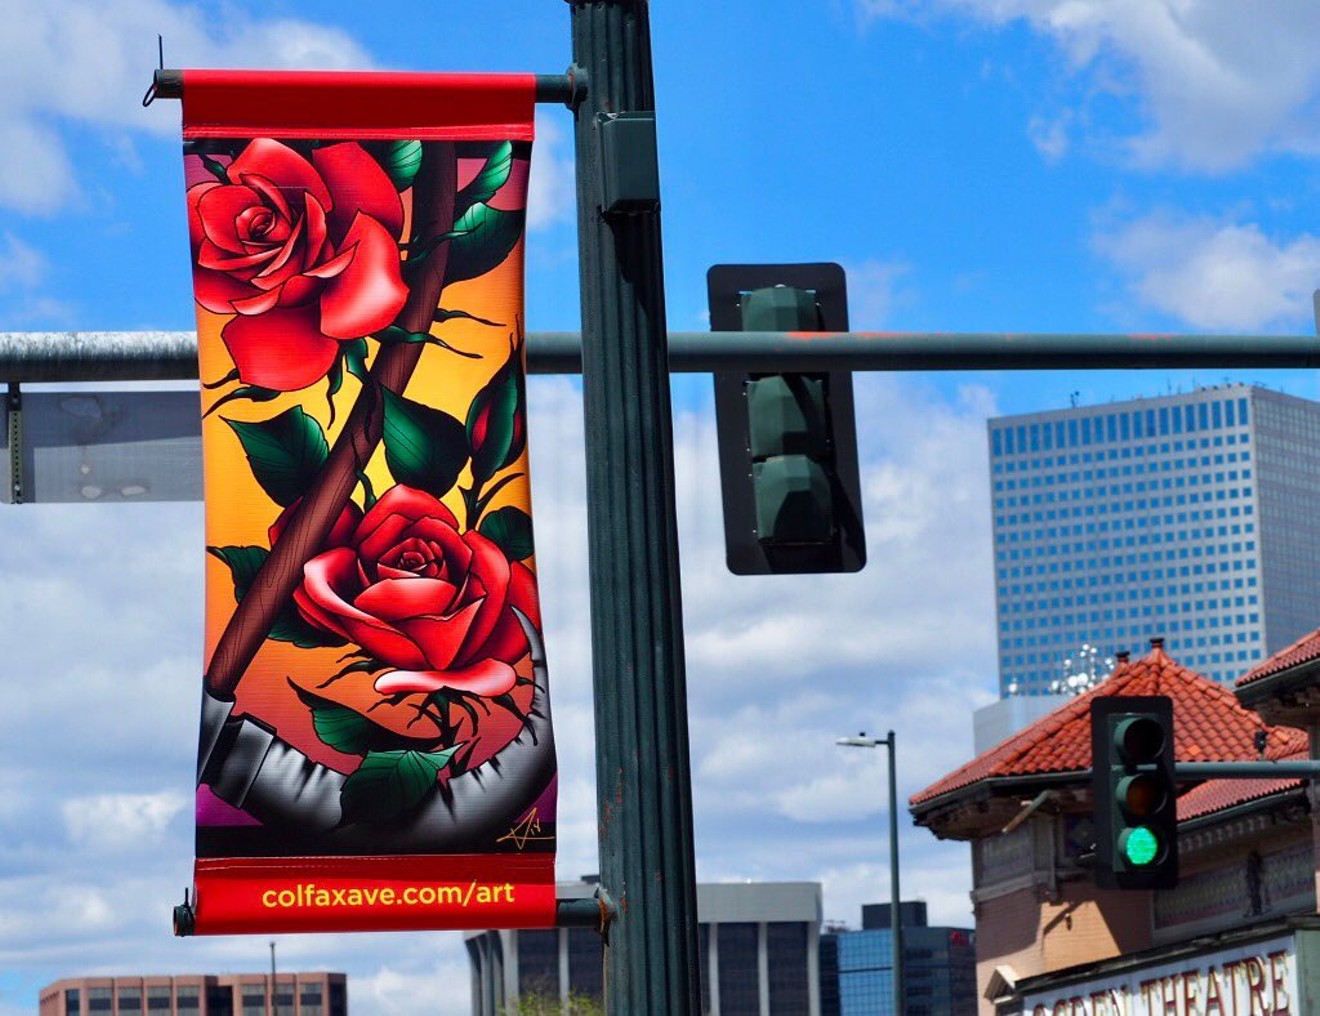 Travis Koenig's "The Colfax Edge" banner was on display in summer 2019.